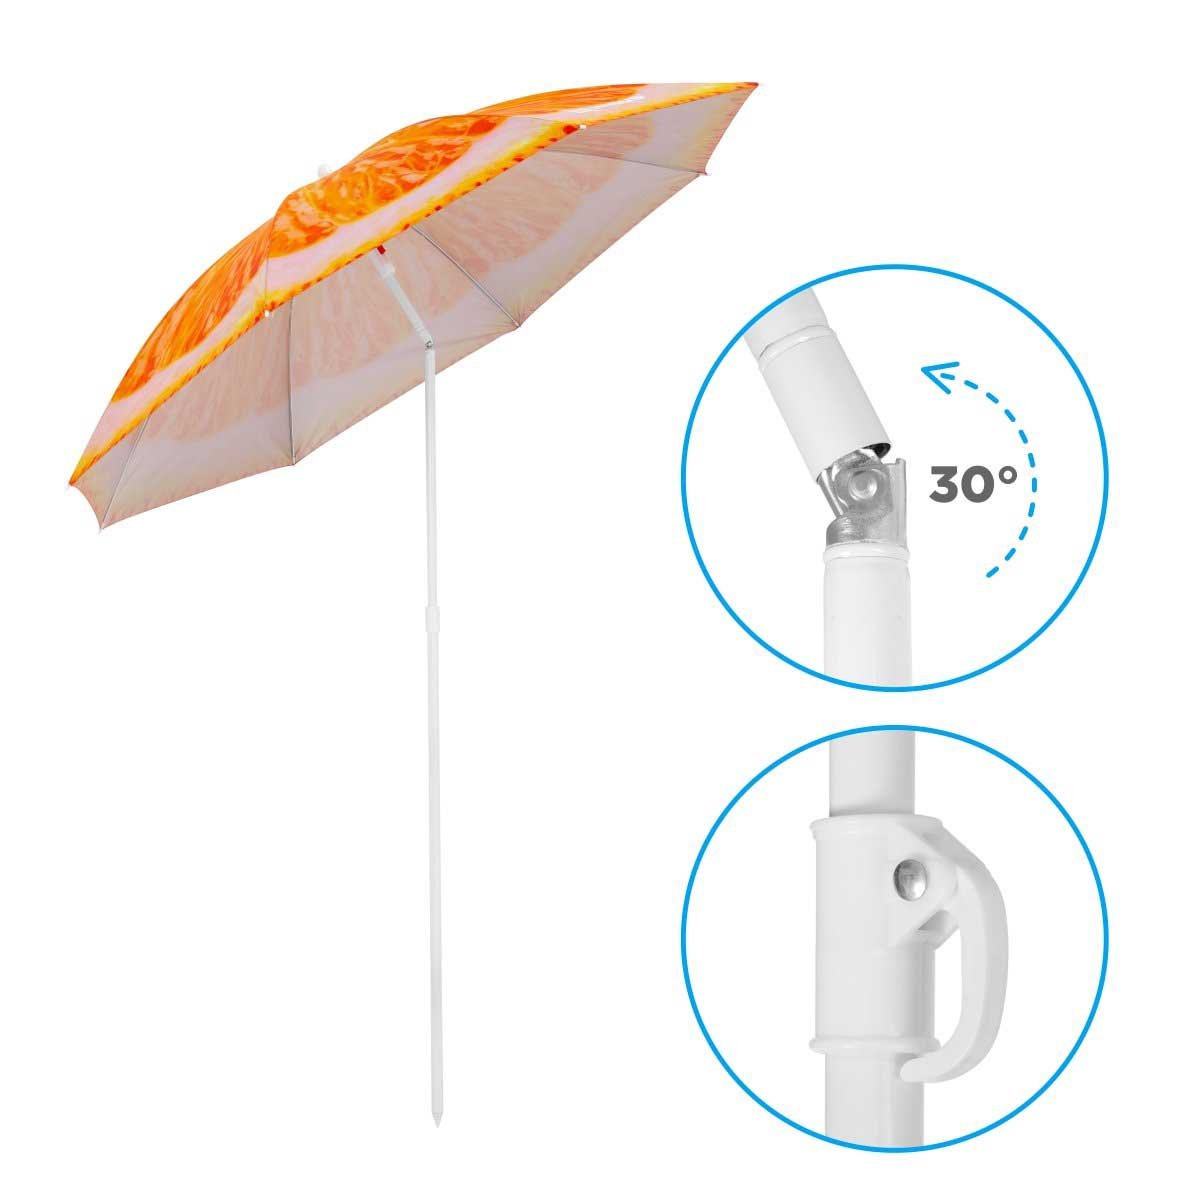 Orange Folding Tilting Beach Umbrella boasting a 30 degree inclining angle